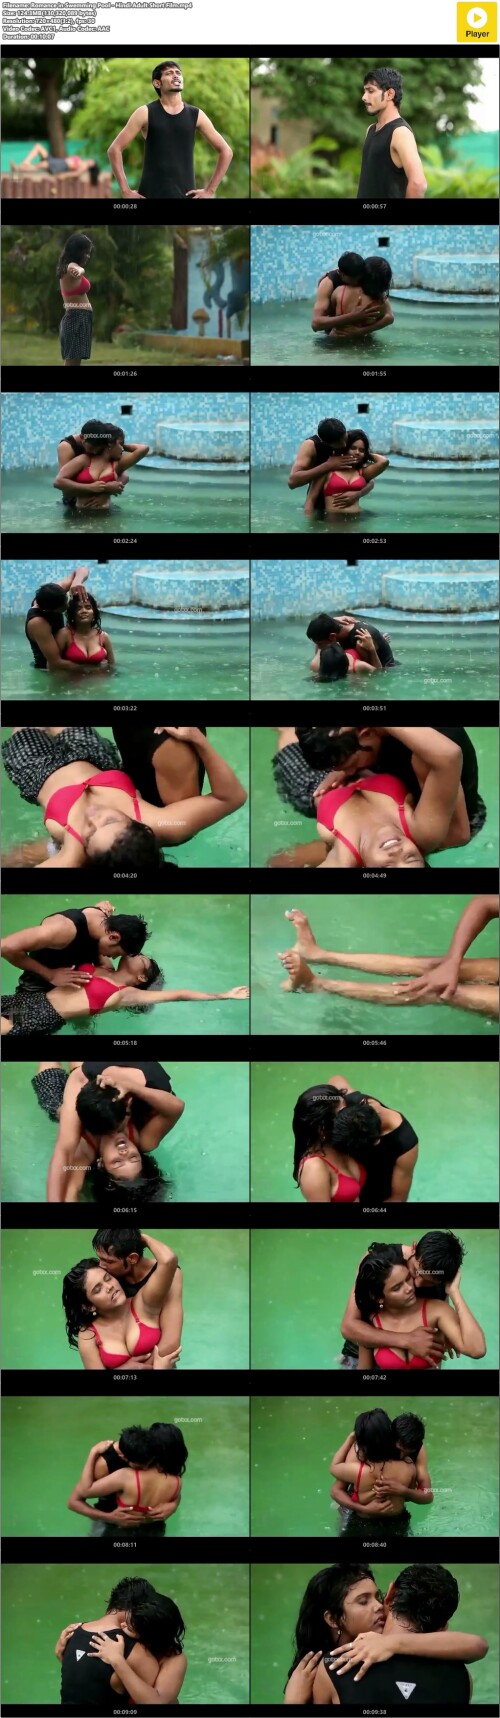 Romance in Swemming Pool Hindi Adult Short Film.mp4